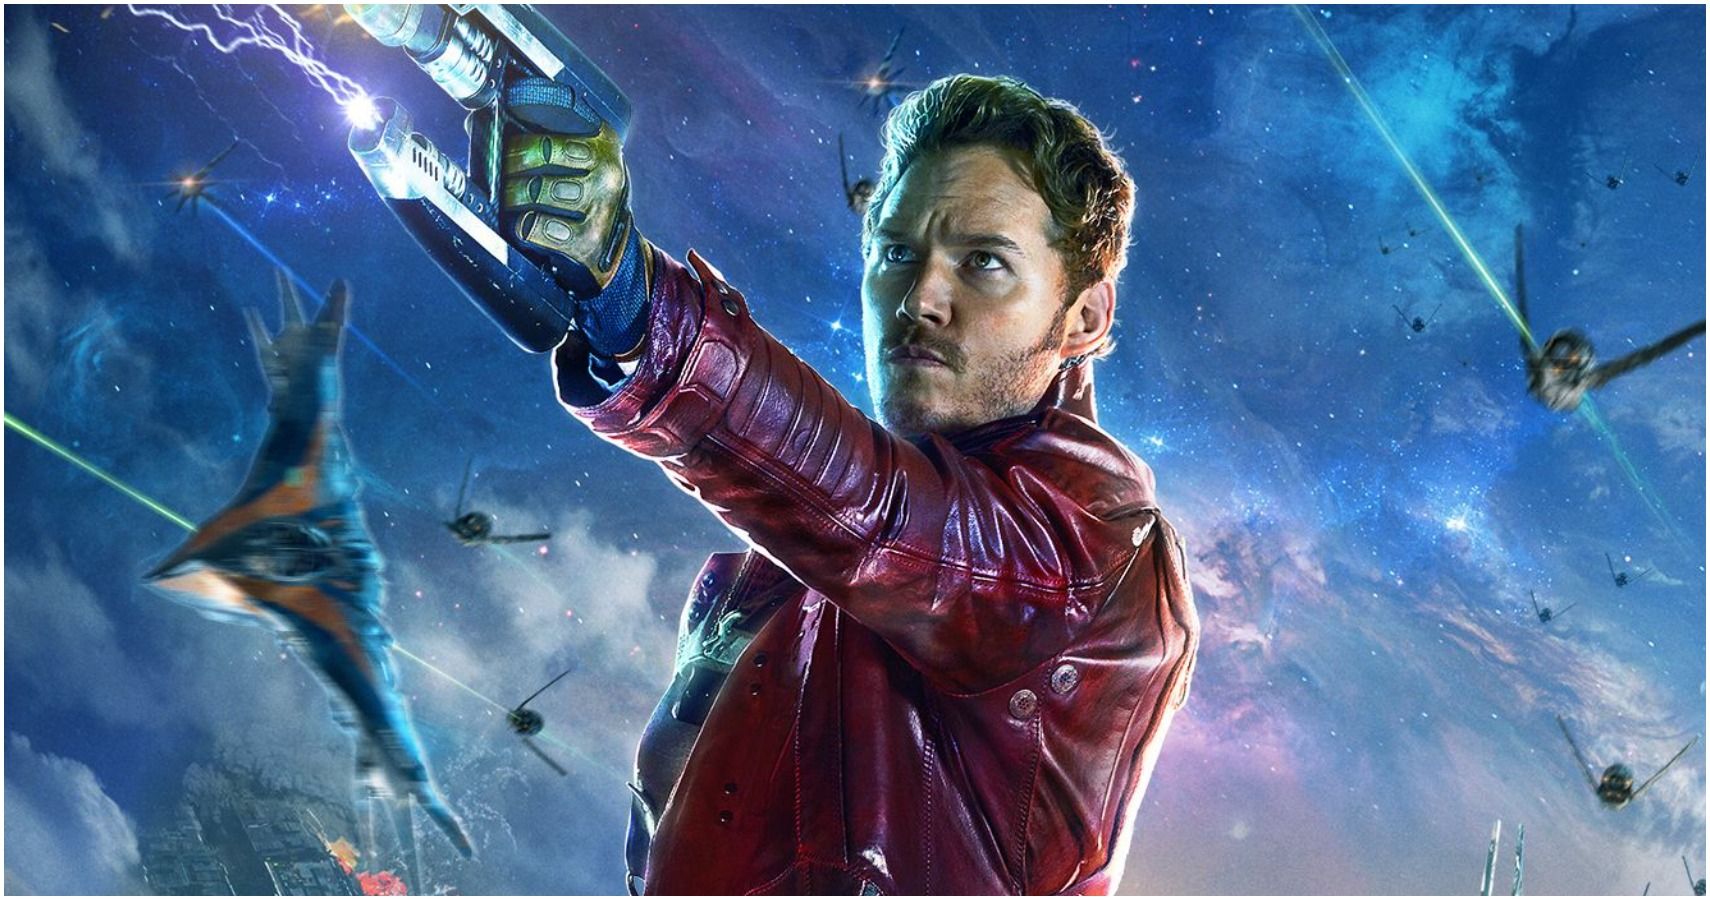 Chris Pratt would return as Star-Lord if something makes sense